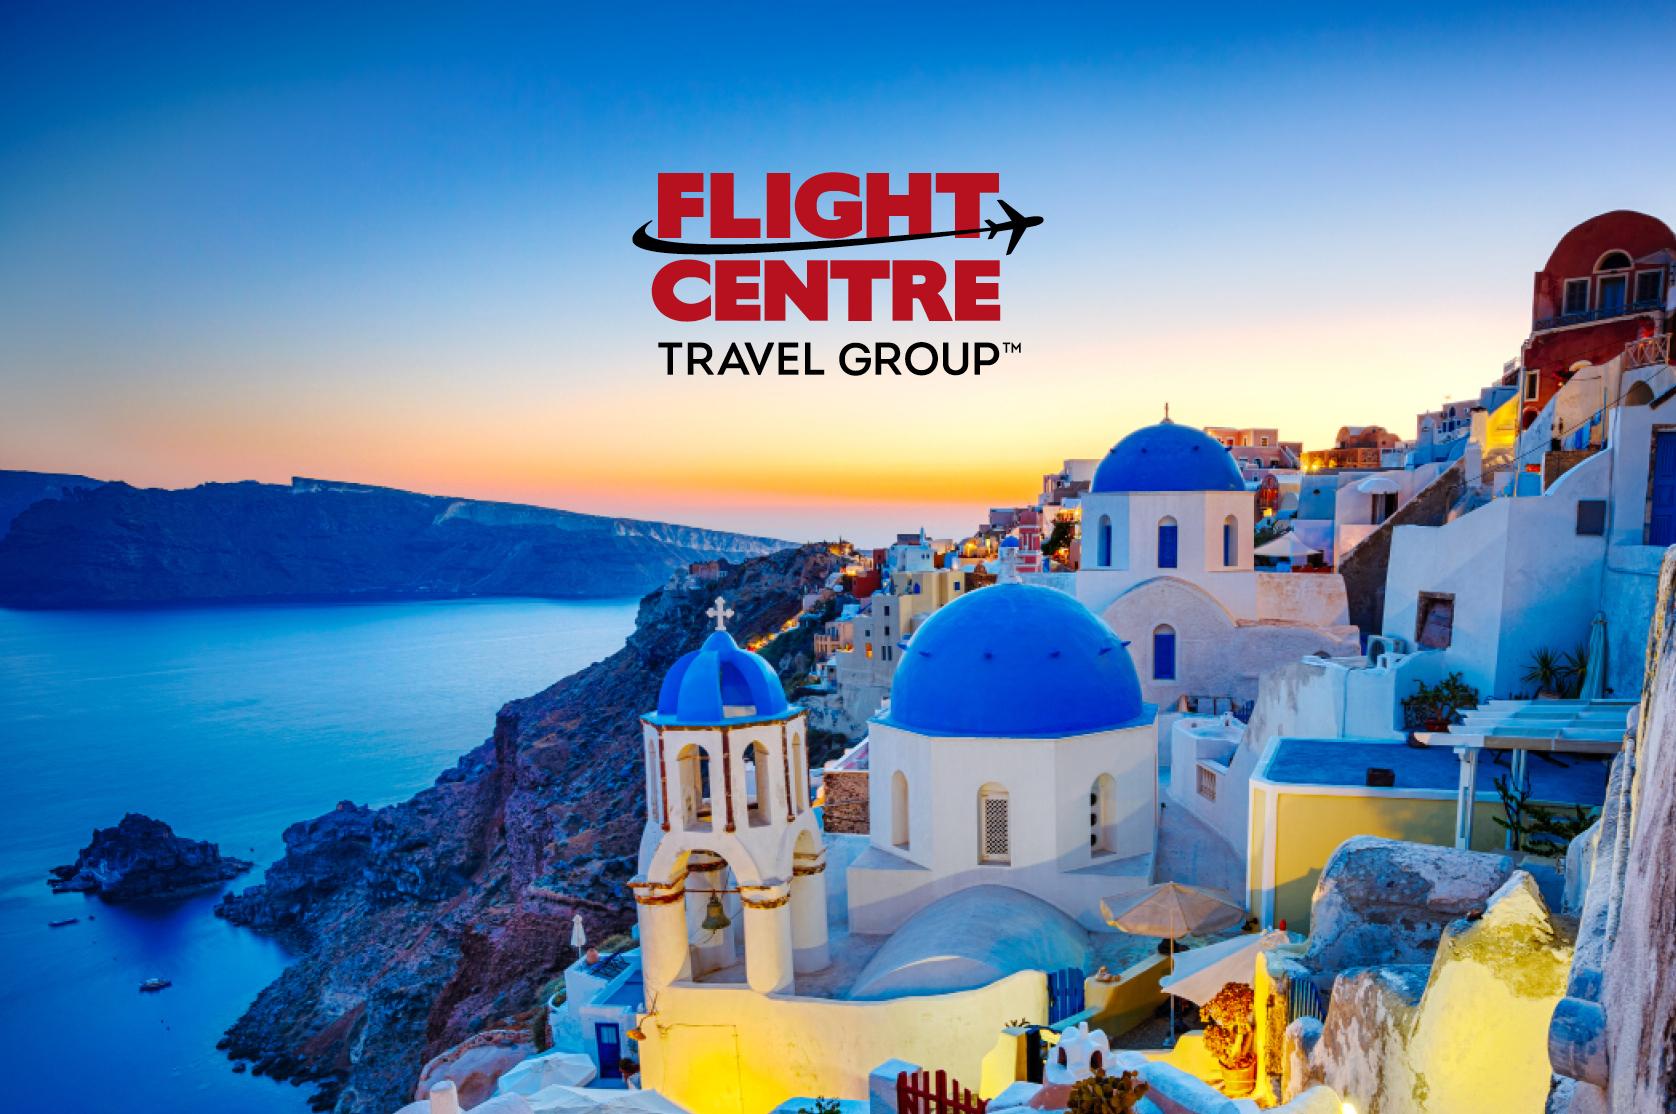 Our Flight Centre travel brands